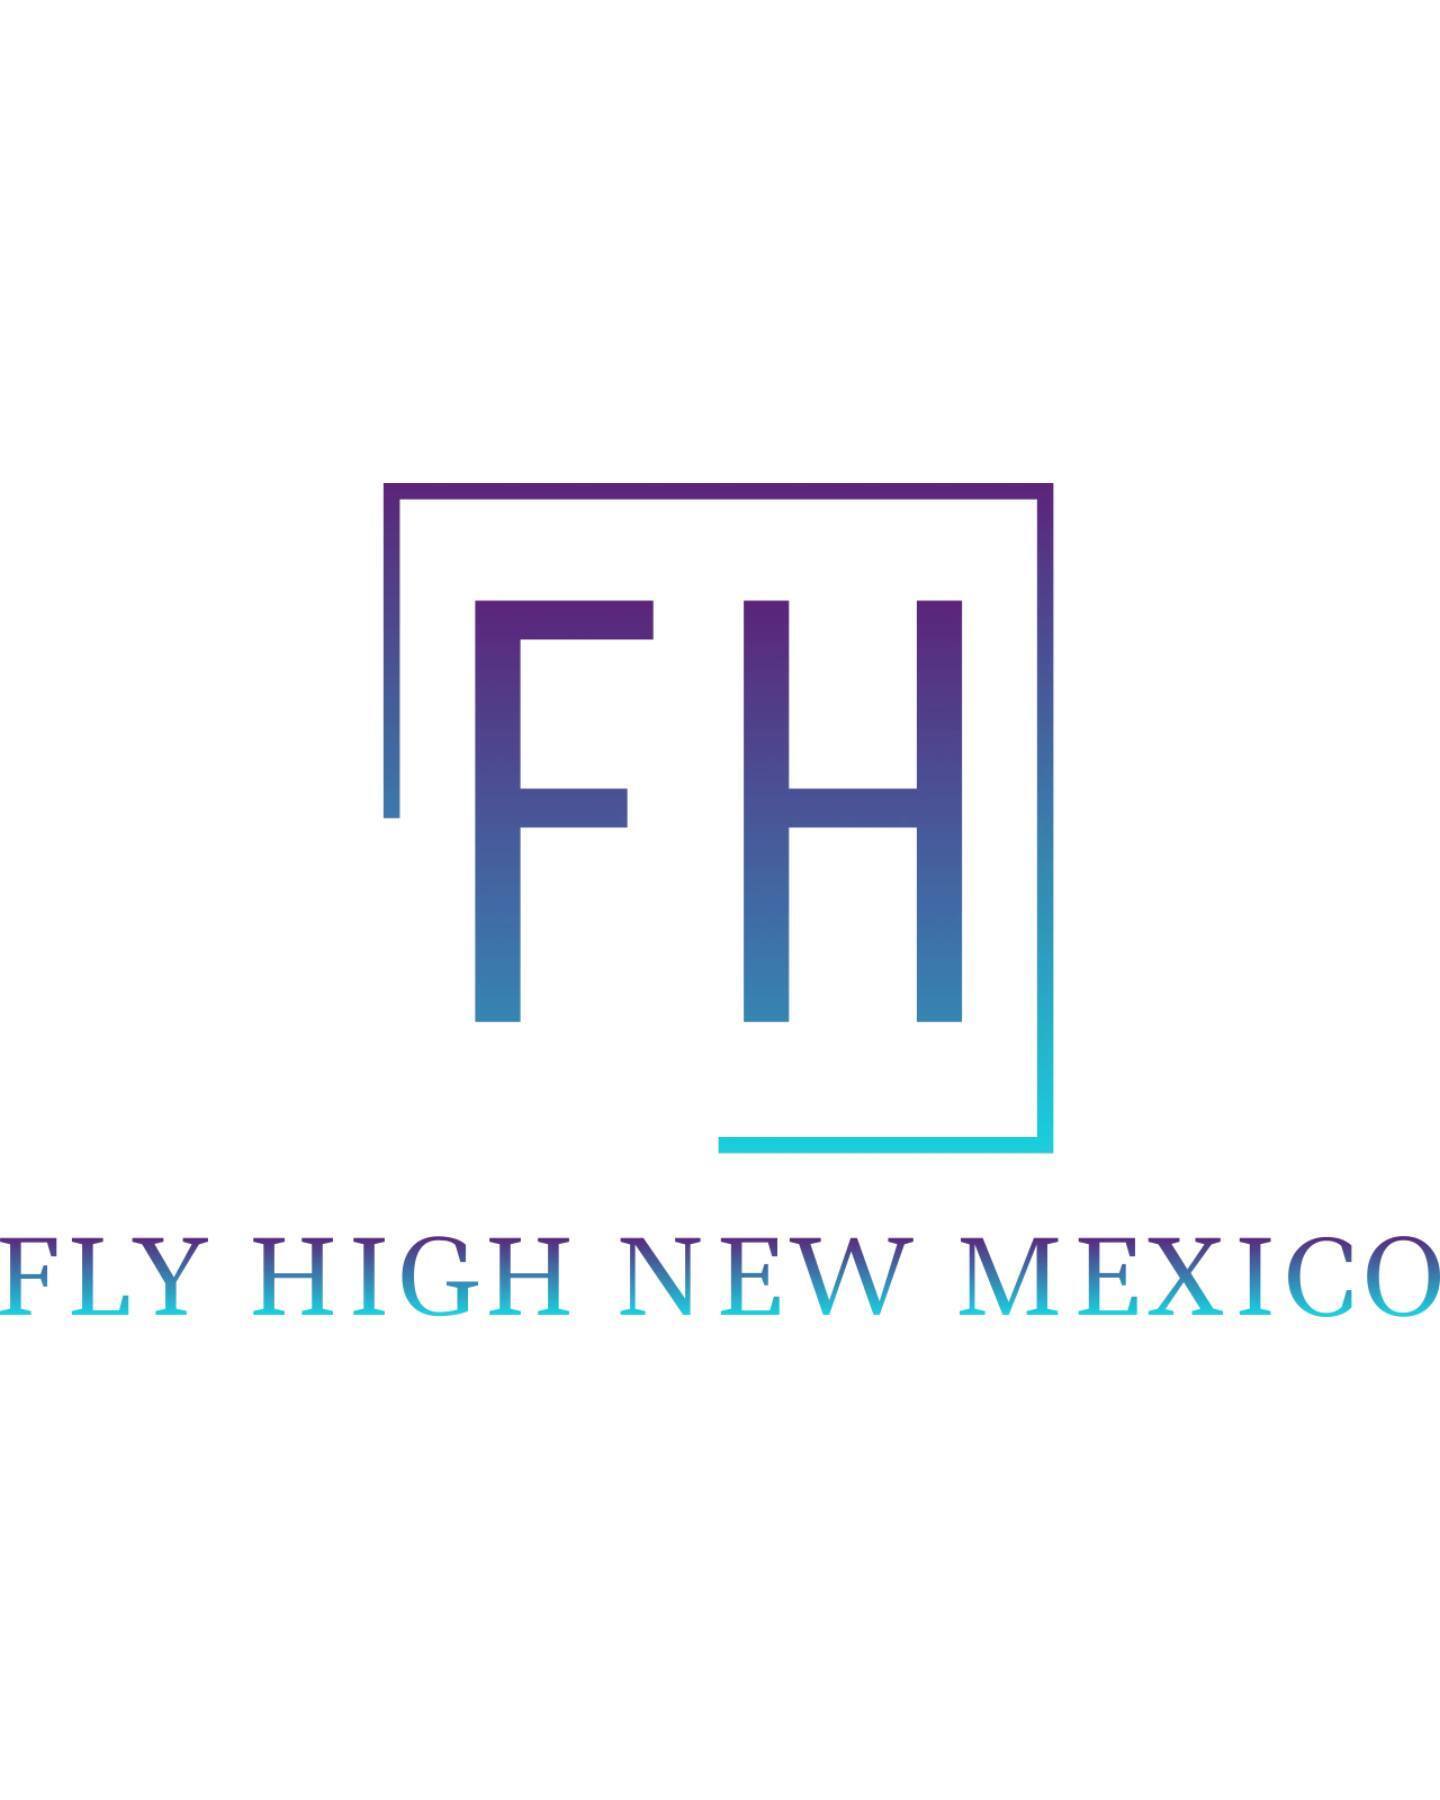 Fly High New Mexico logo